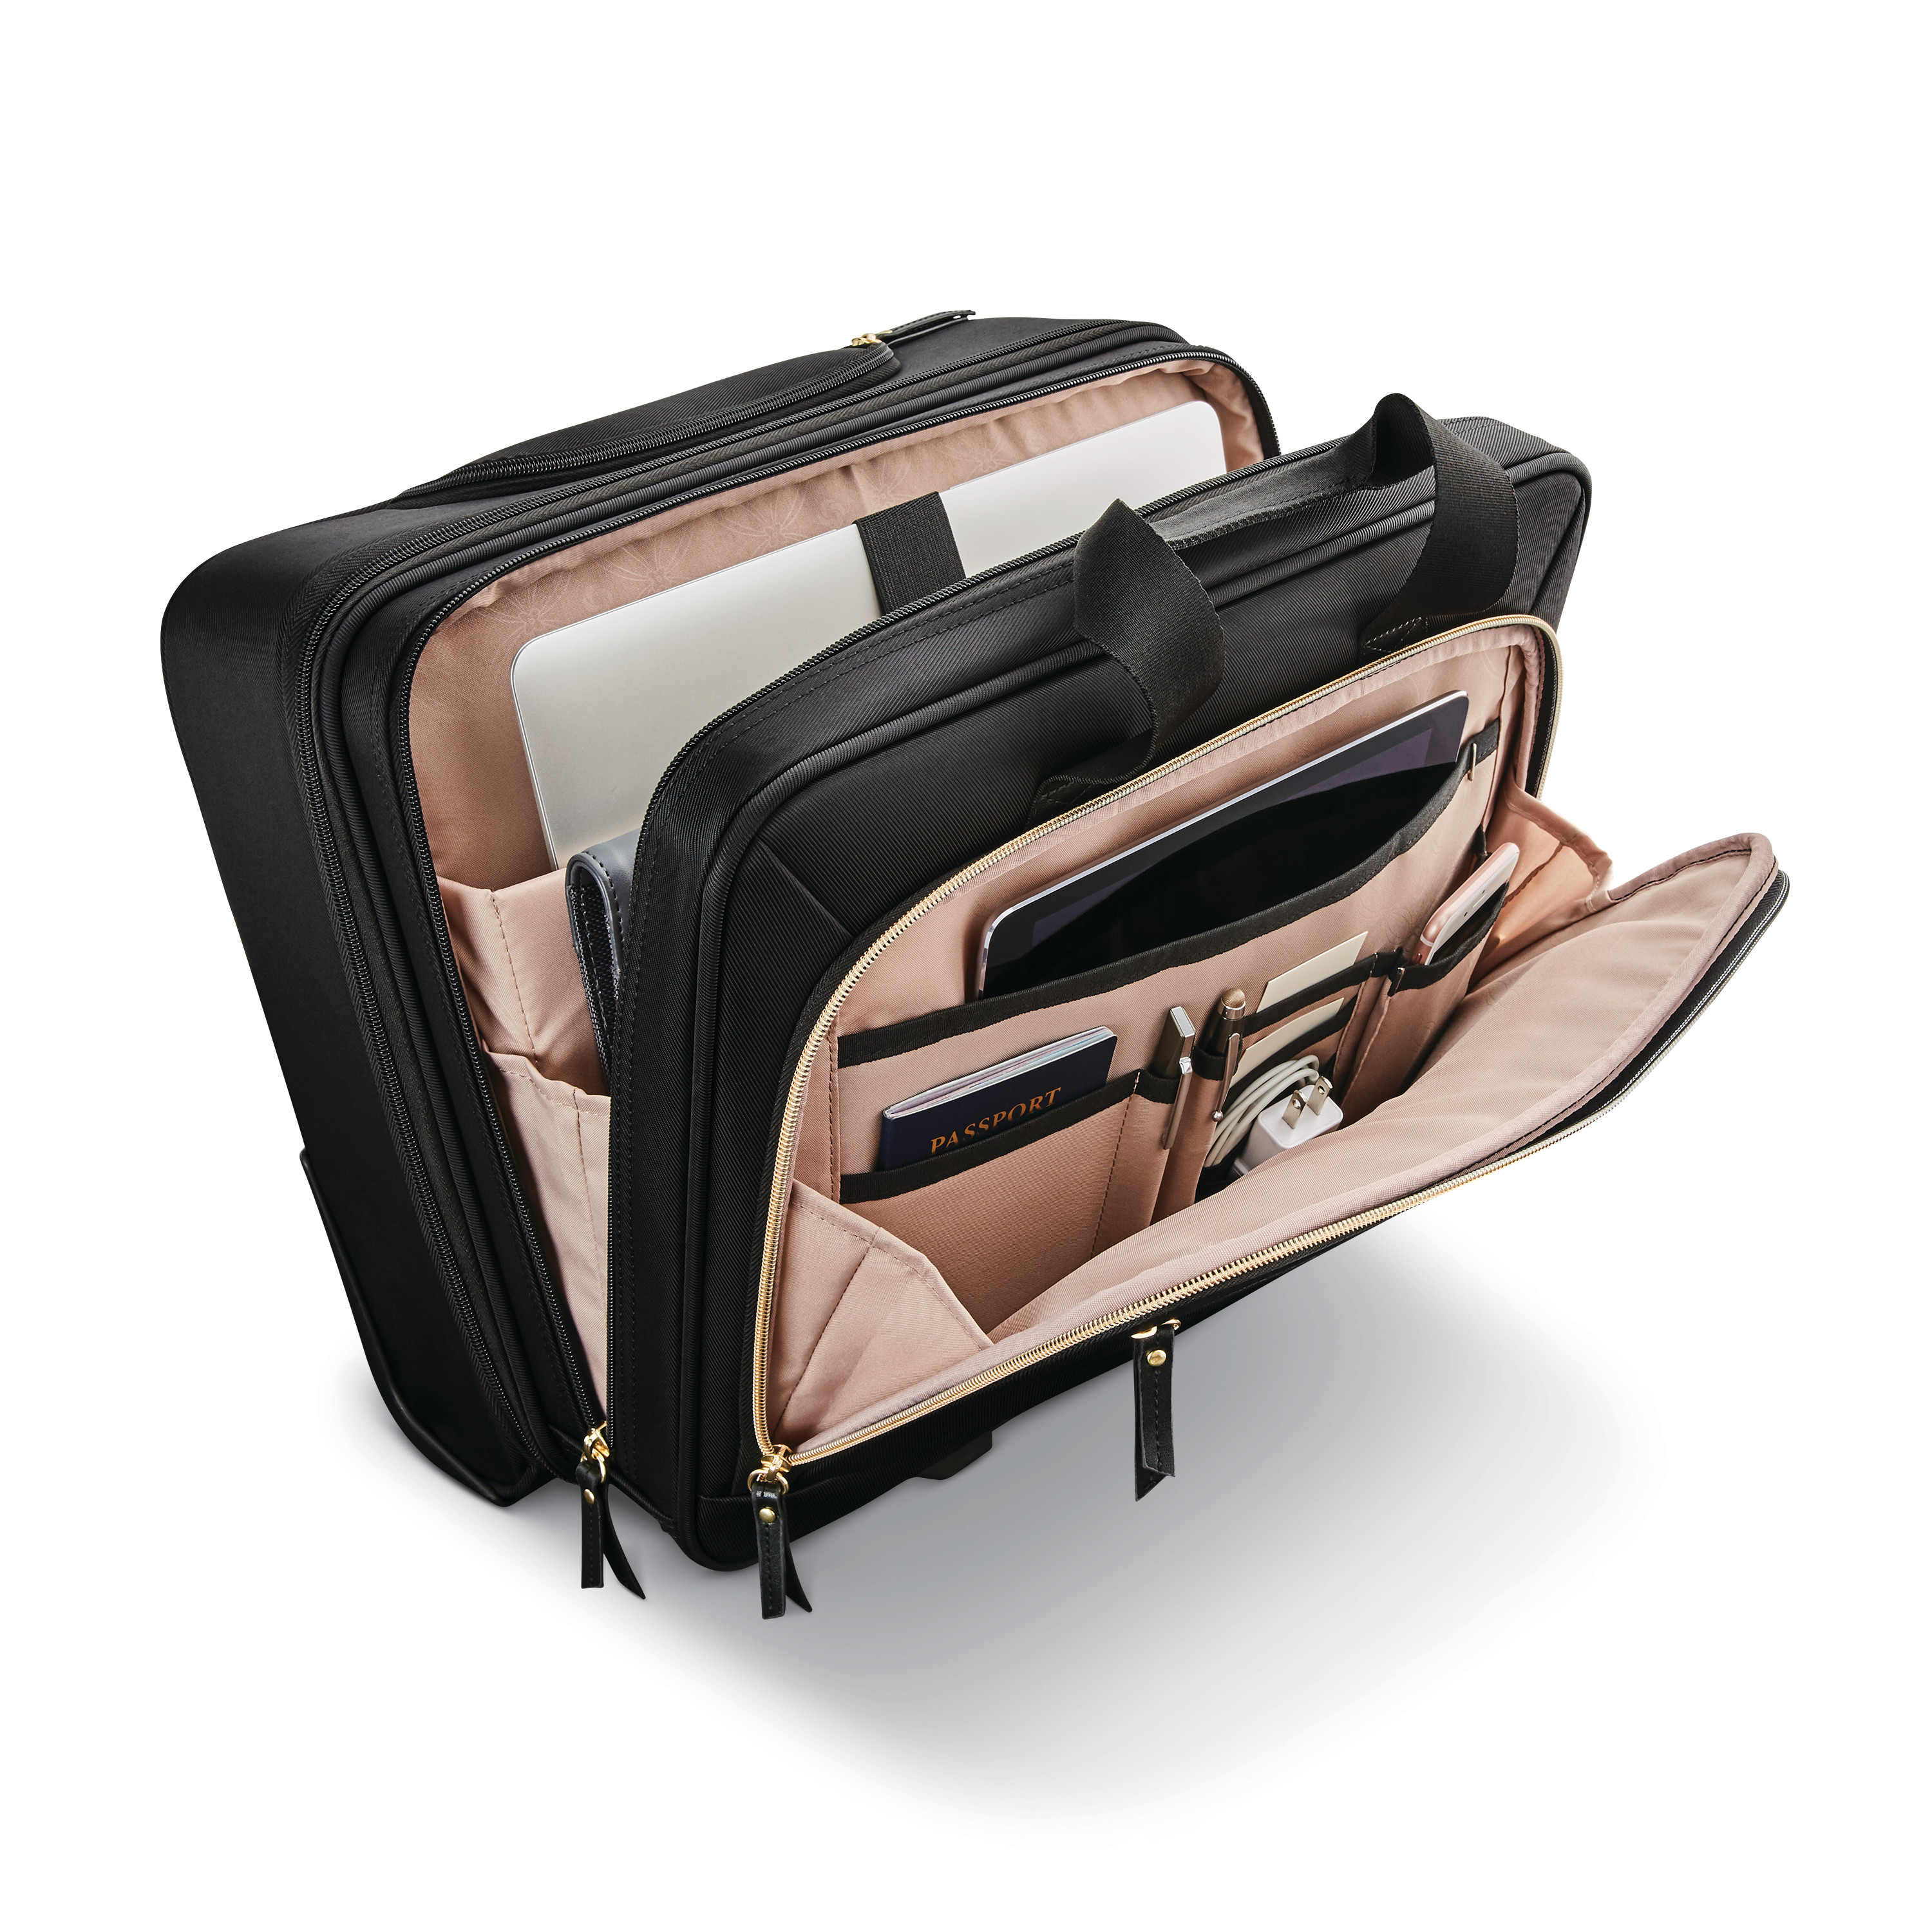 Bulletproof Exec-Mobile Office Luggage